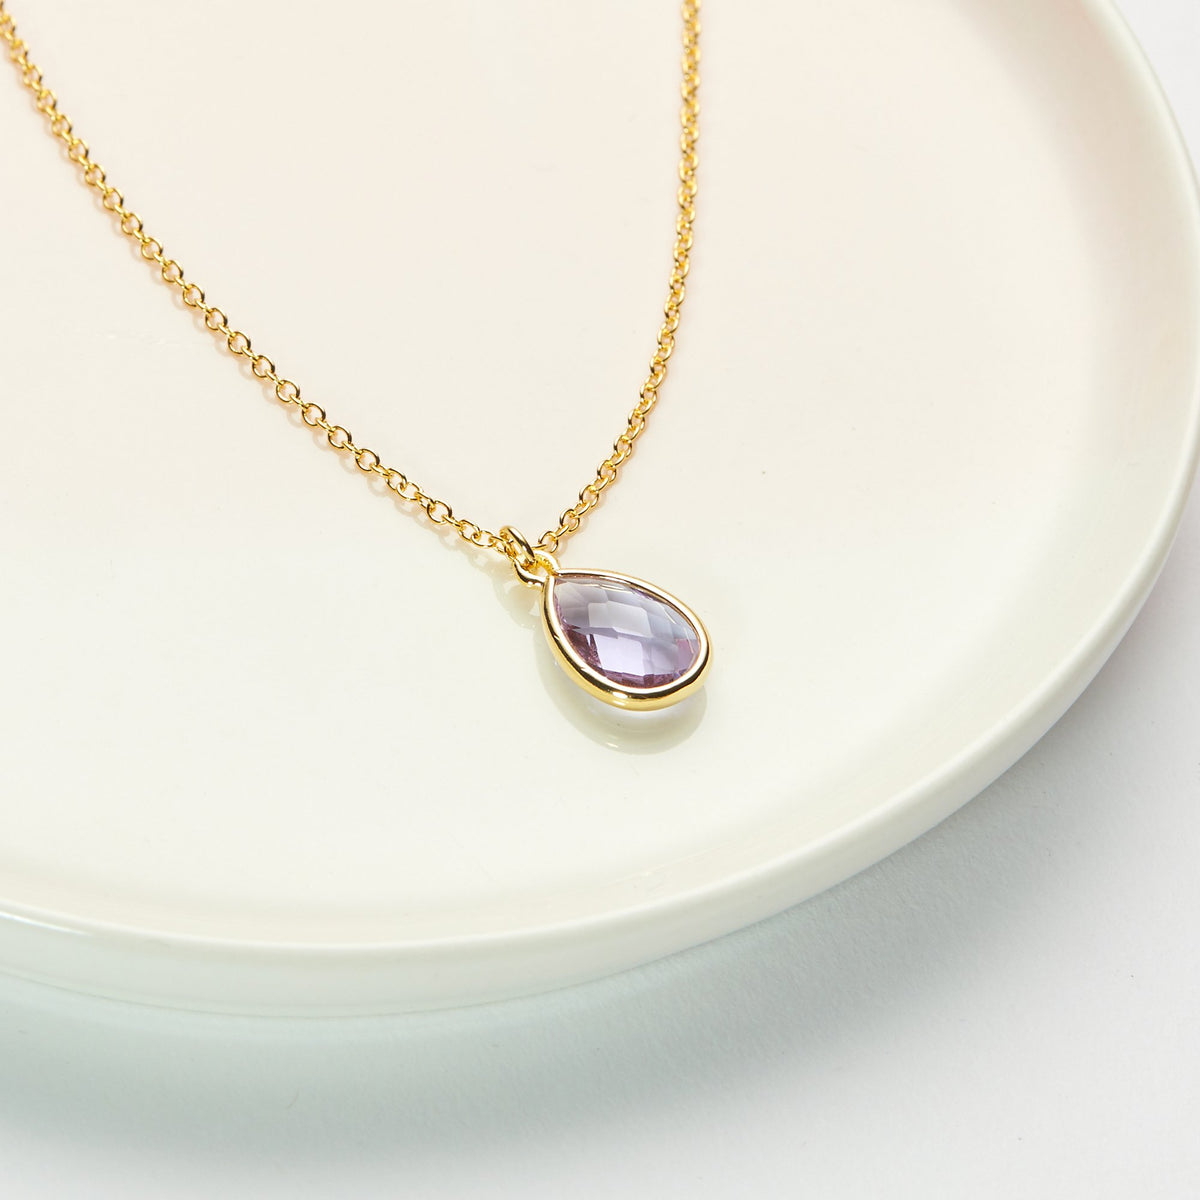 Daughter Necklace - Dear Ava, Jewelry / Necklaces / Pendants